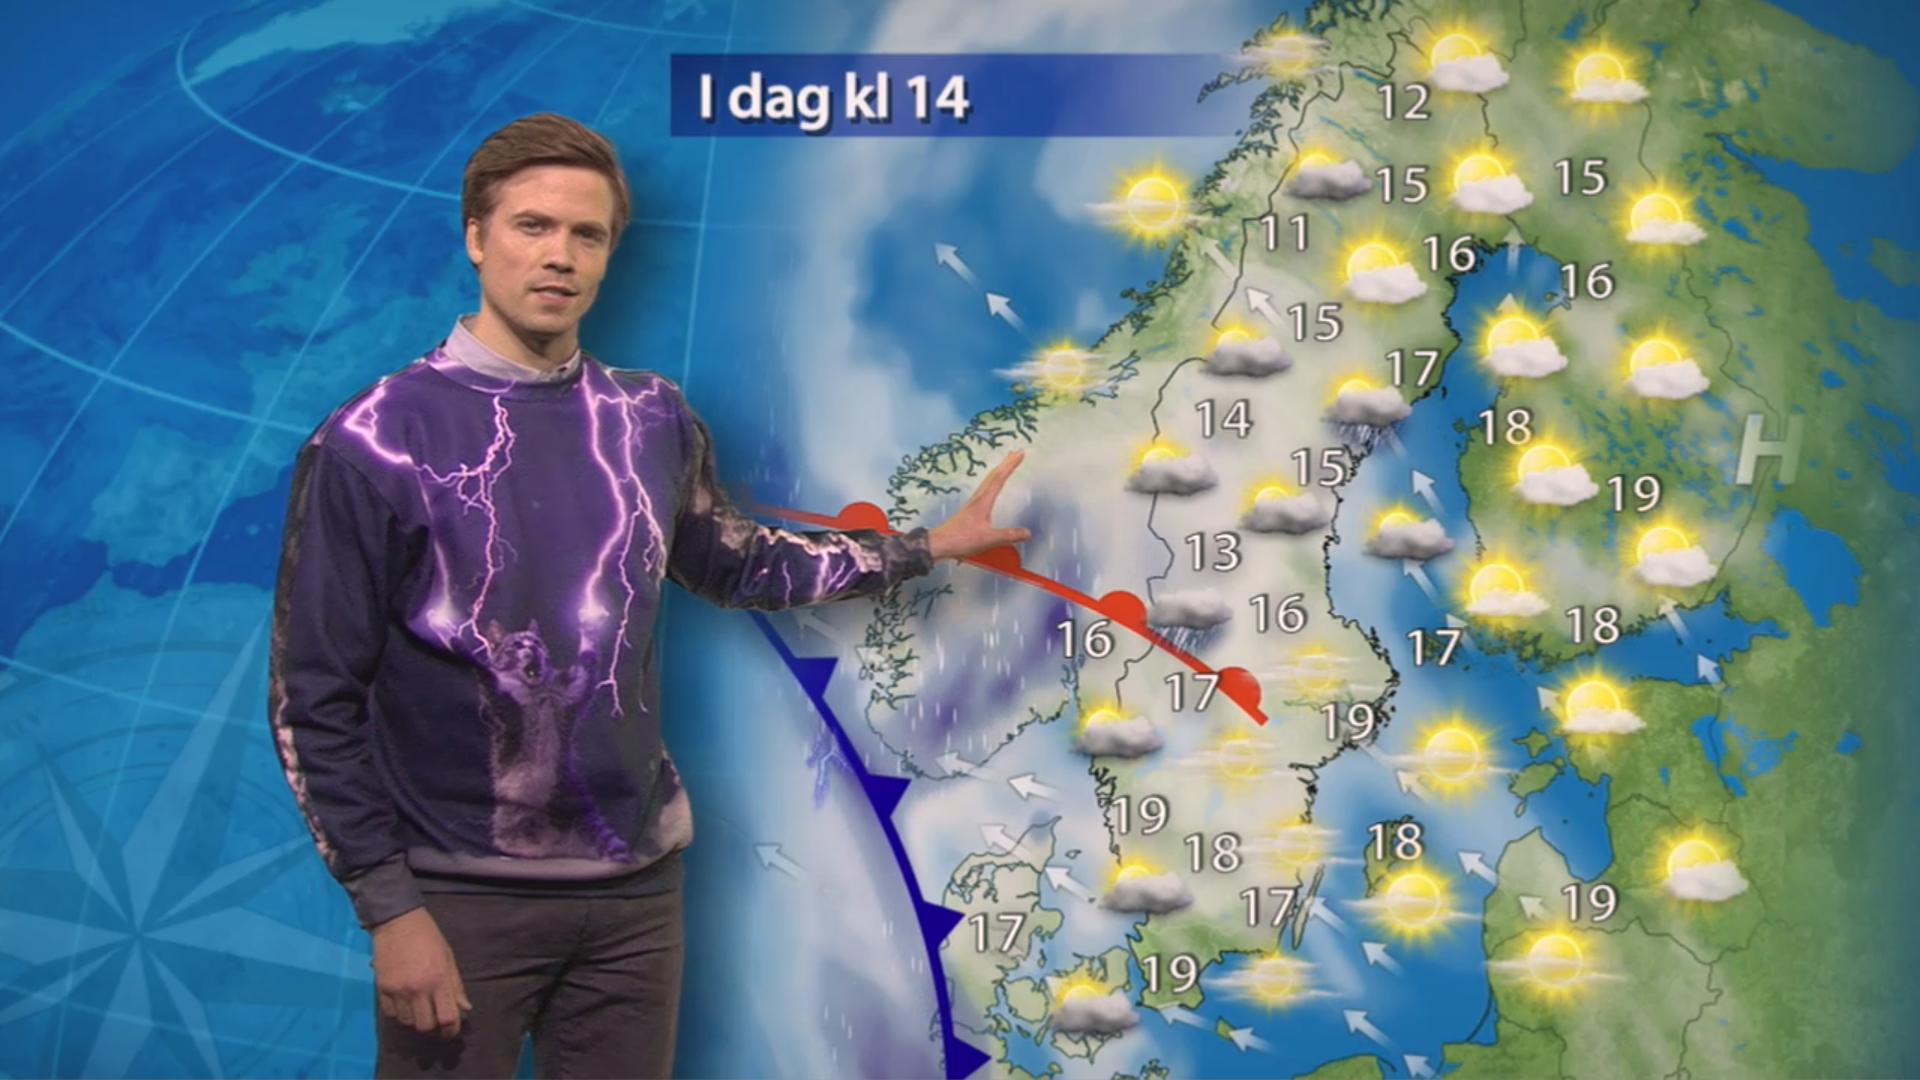 The Swedish weather guy has a nice sweater